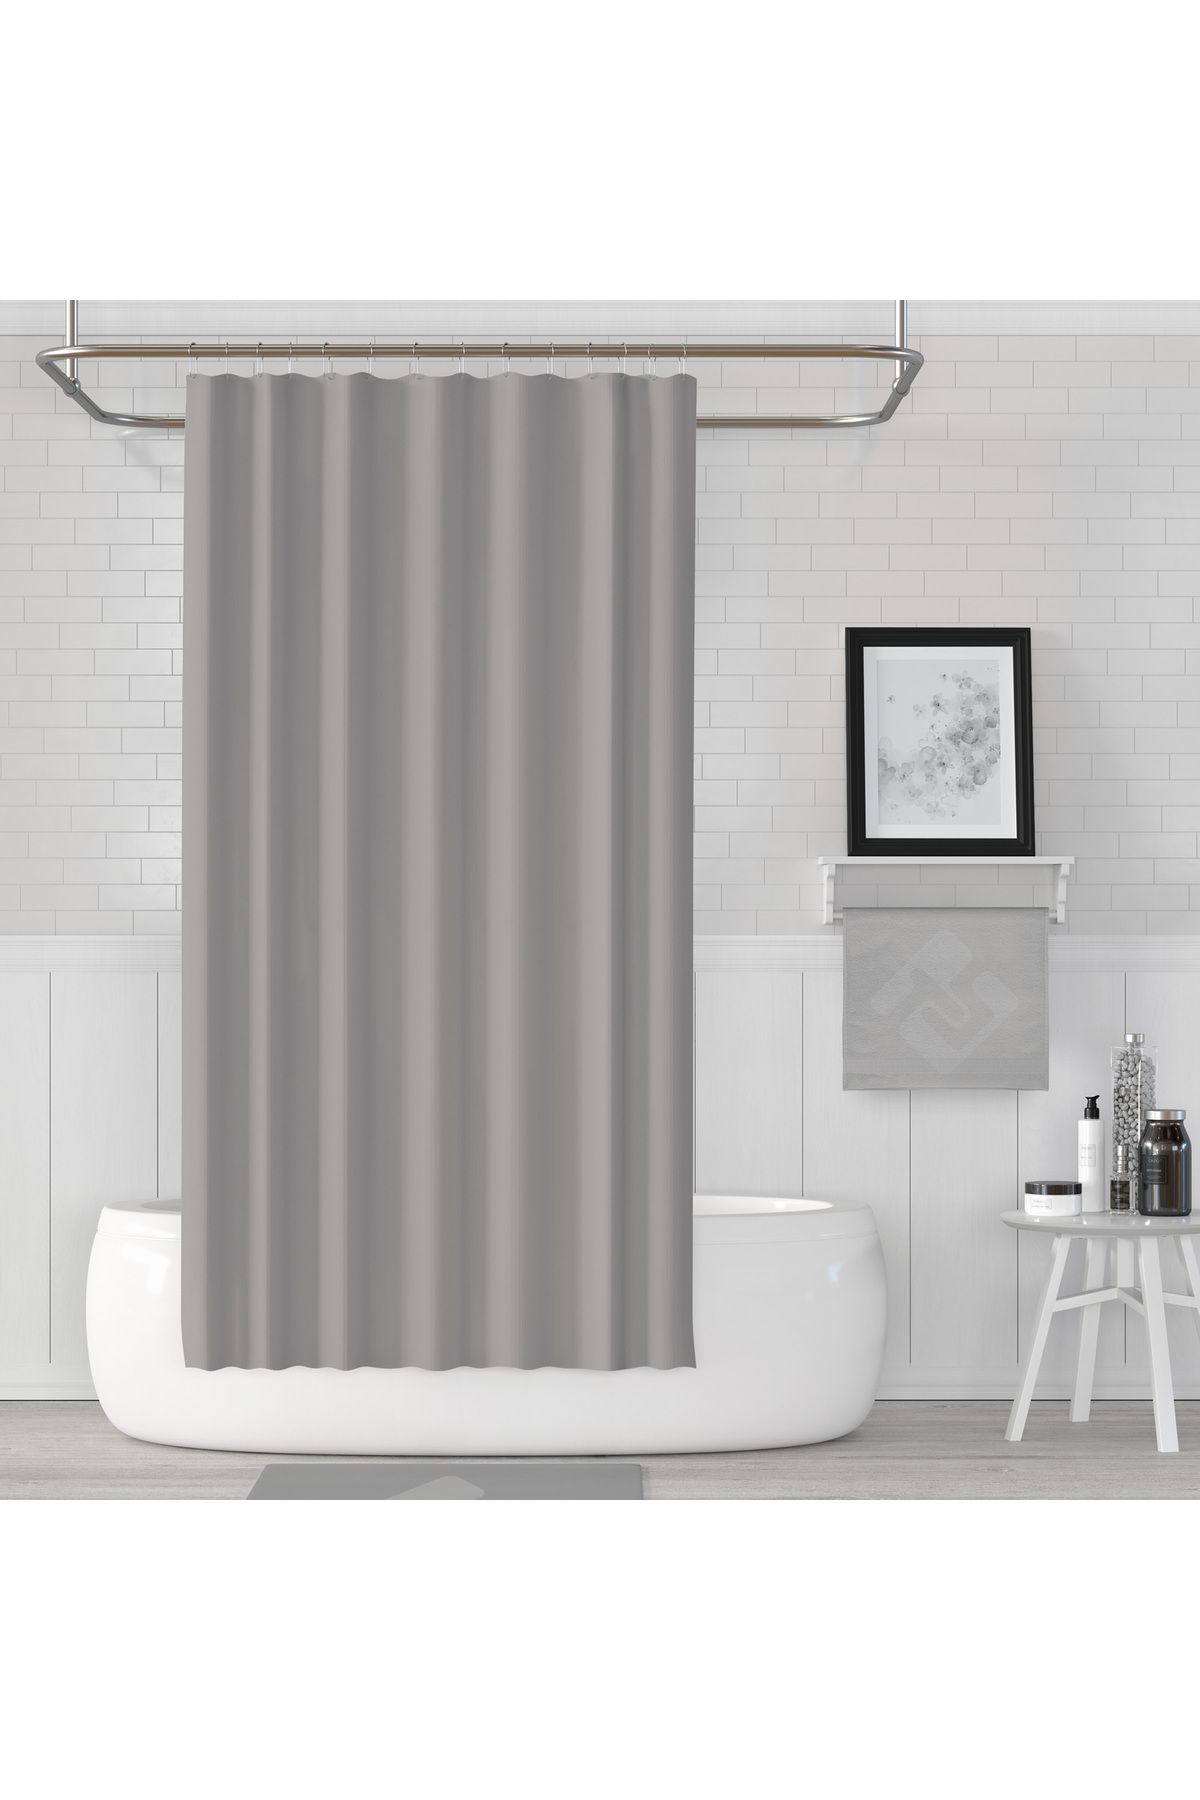 Tropikhome Duş Perdesi Çift Kanat 2x120x200cm Gri Renk Banyo Perdesi 16 Adet C Halka Hediyeli